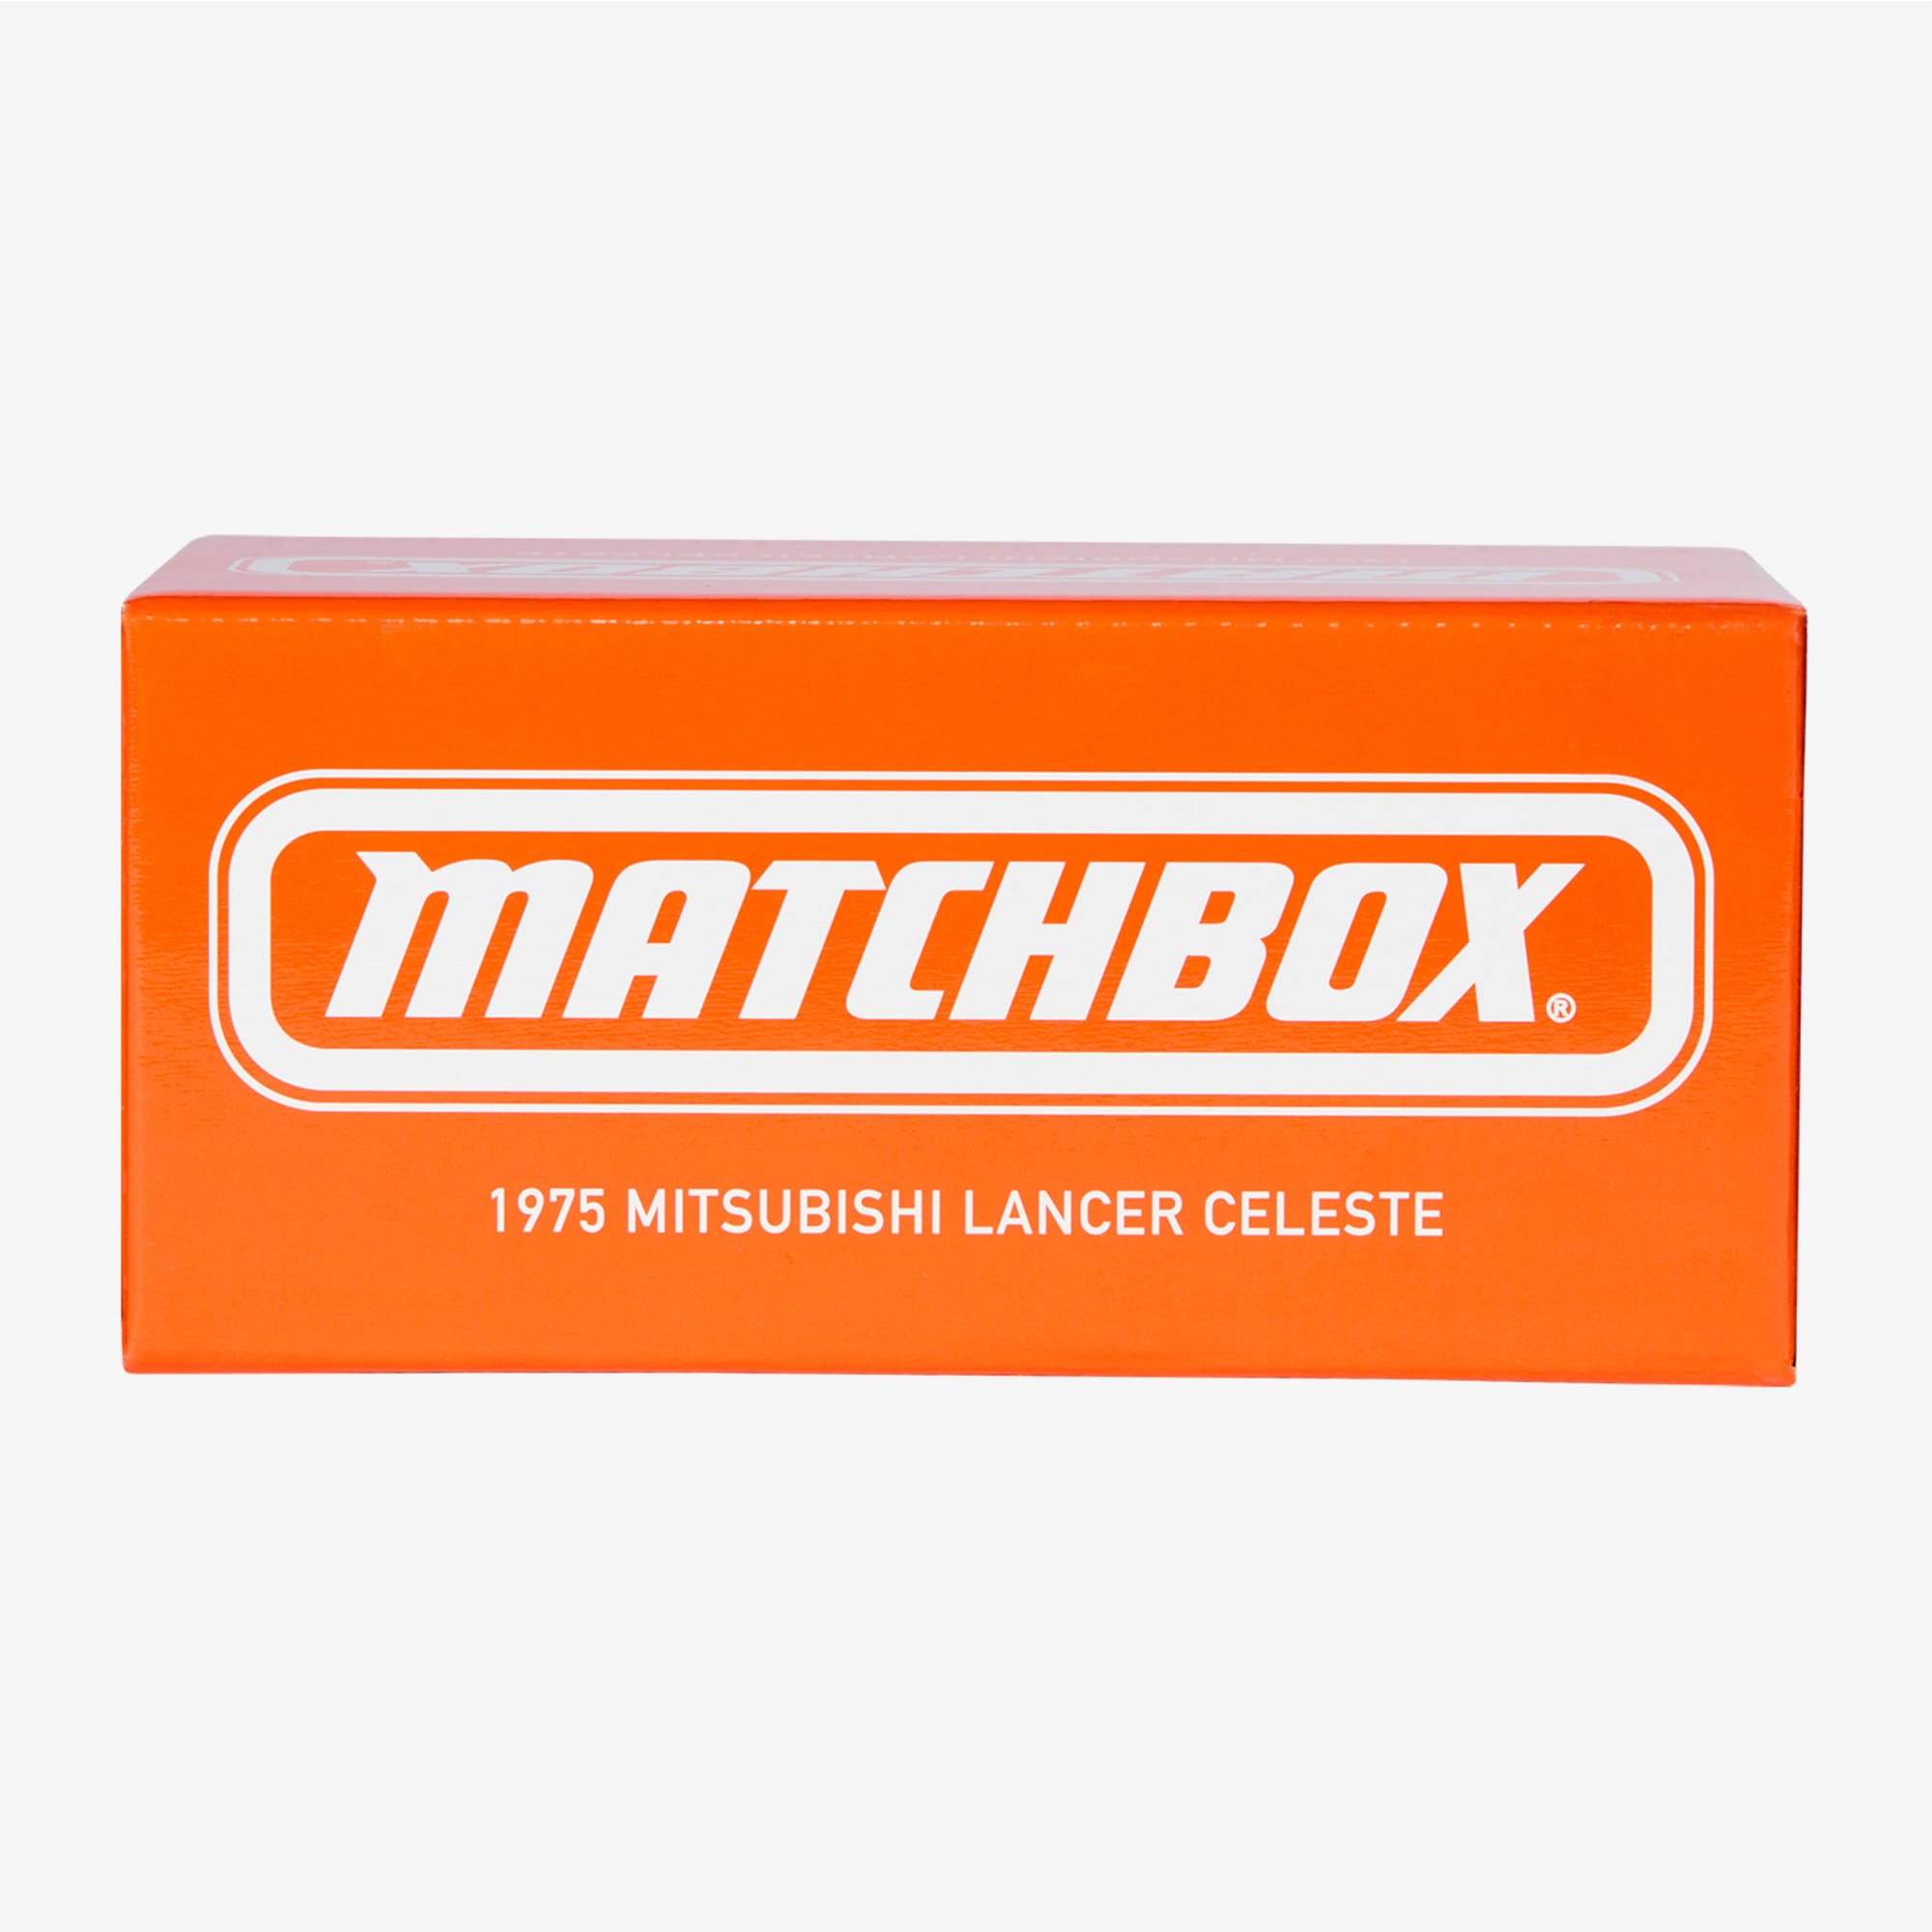 Matchbox 1975 Mitsubishi Lancer Celeste